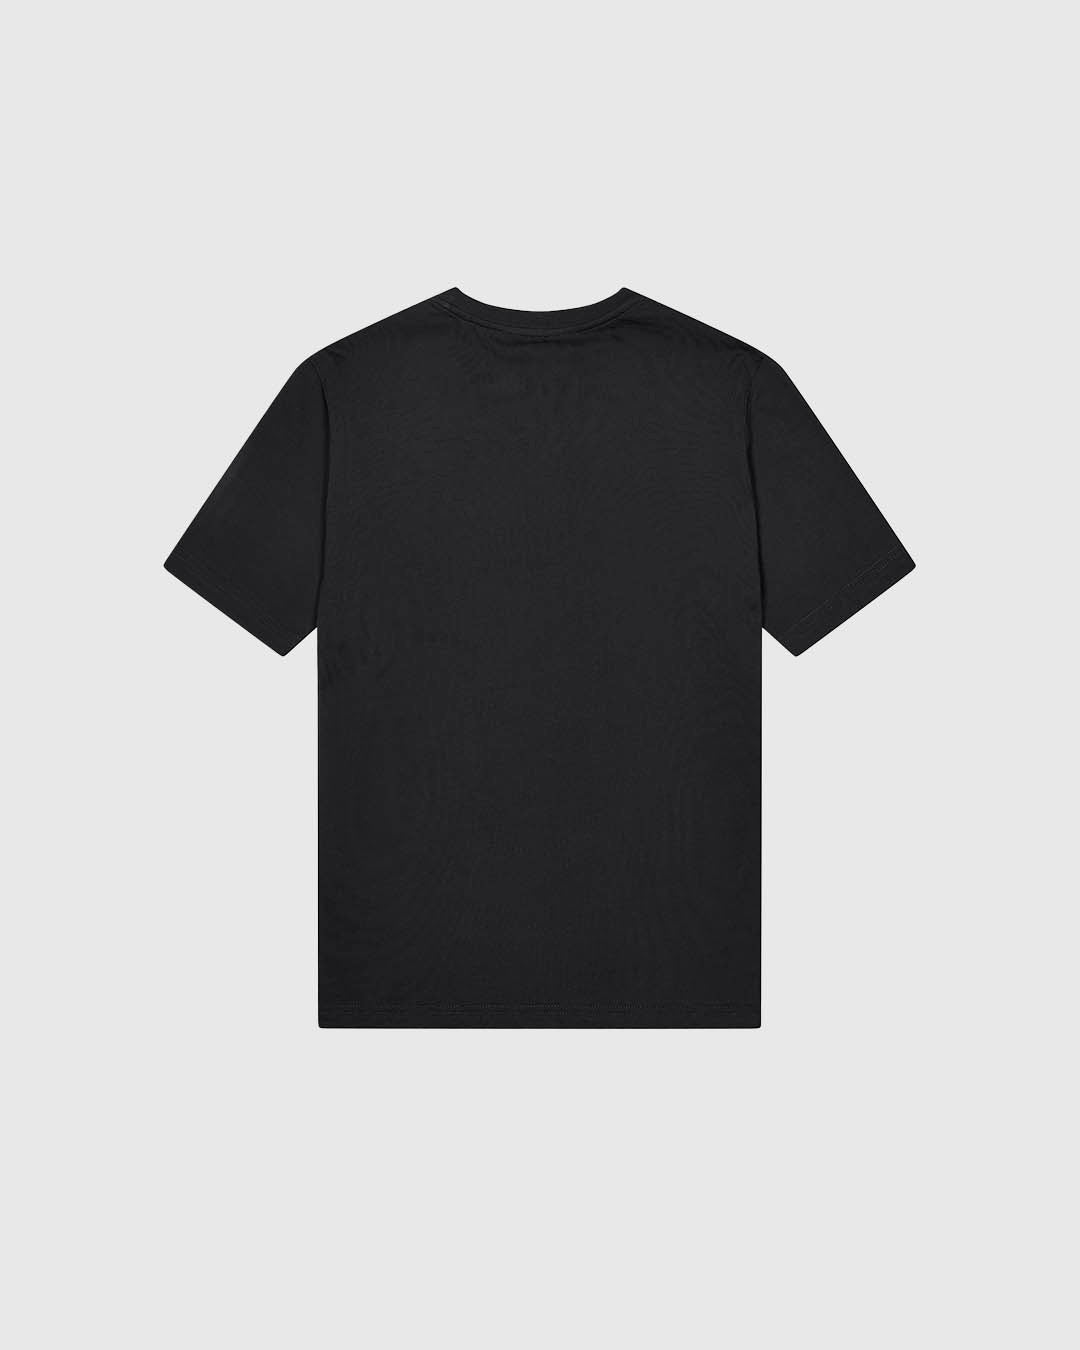 PFC: 003-1 - Men's T-shirt - Onyx Black